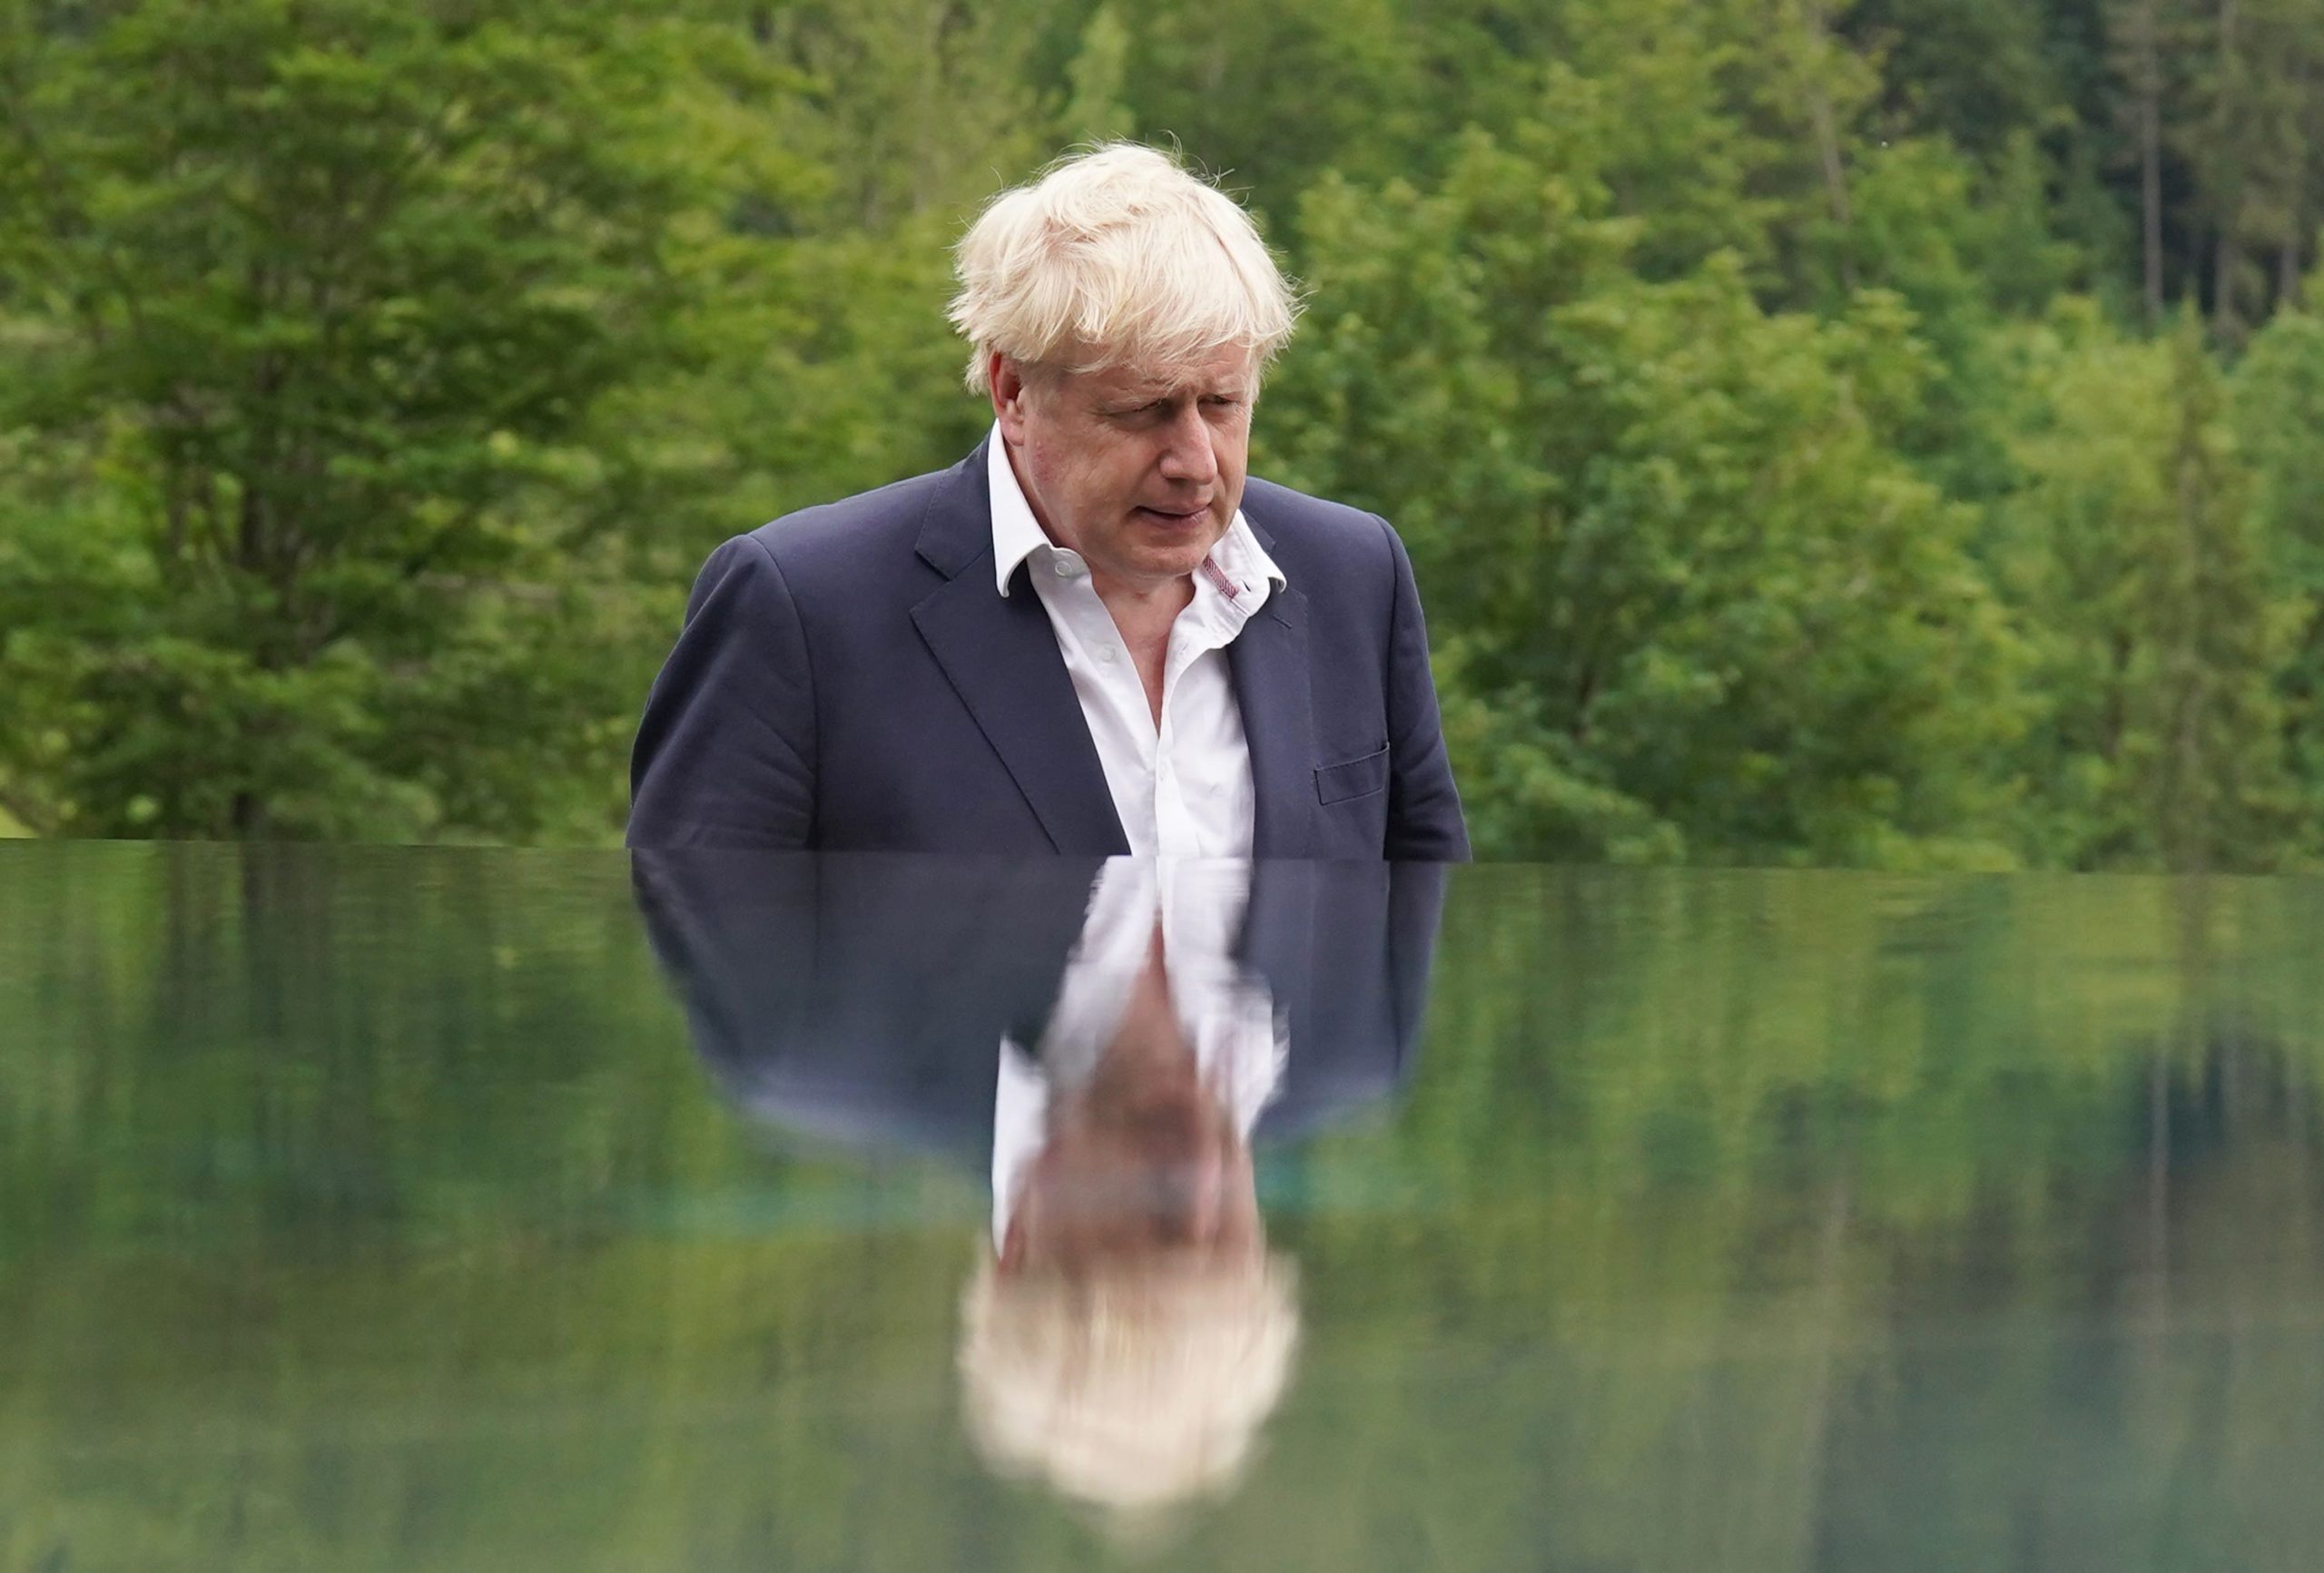 Watch: Peter Oborne dismantles Boris Johnson’s legacy in viral video